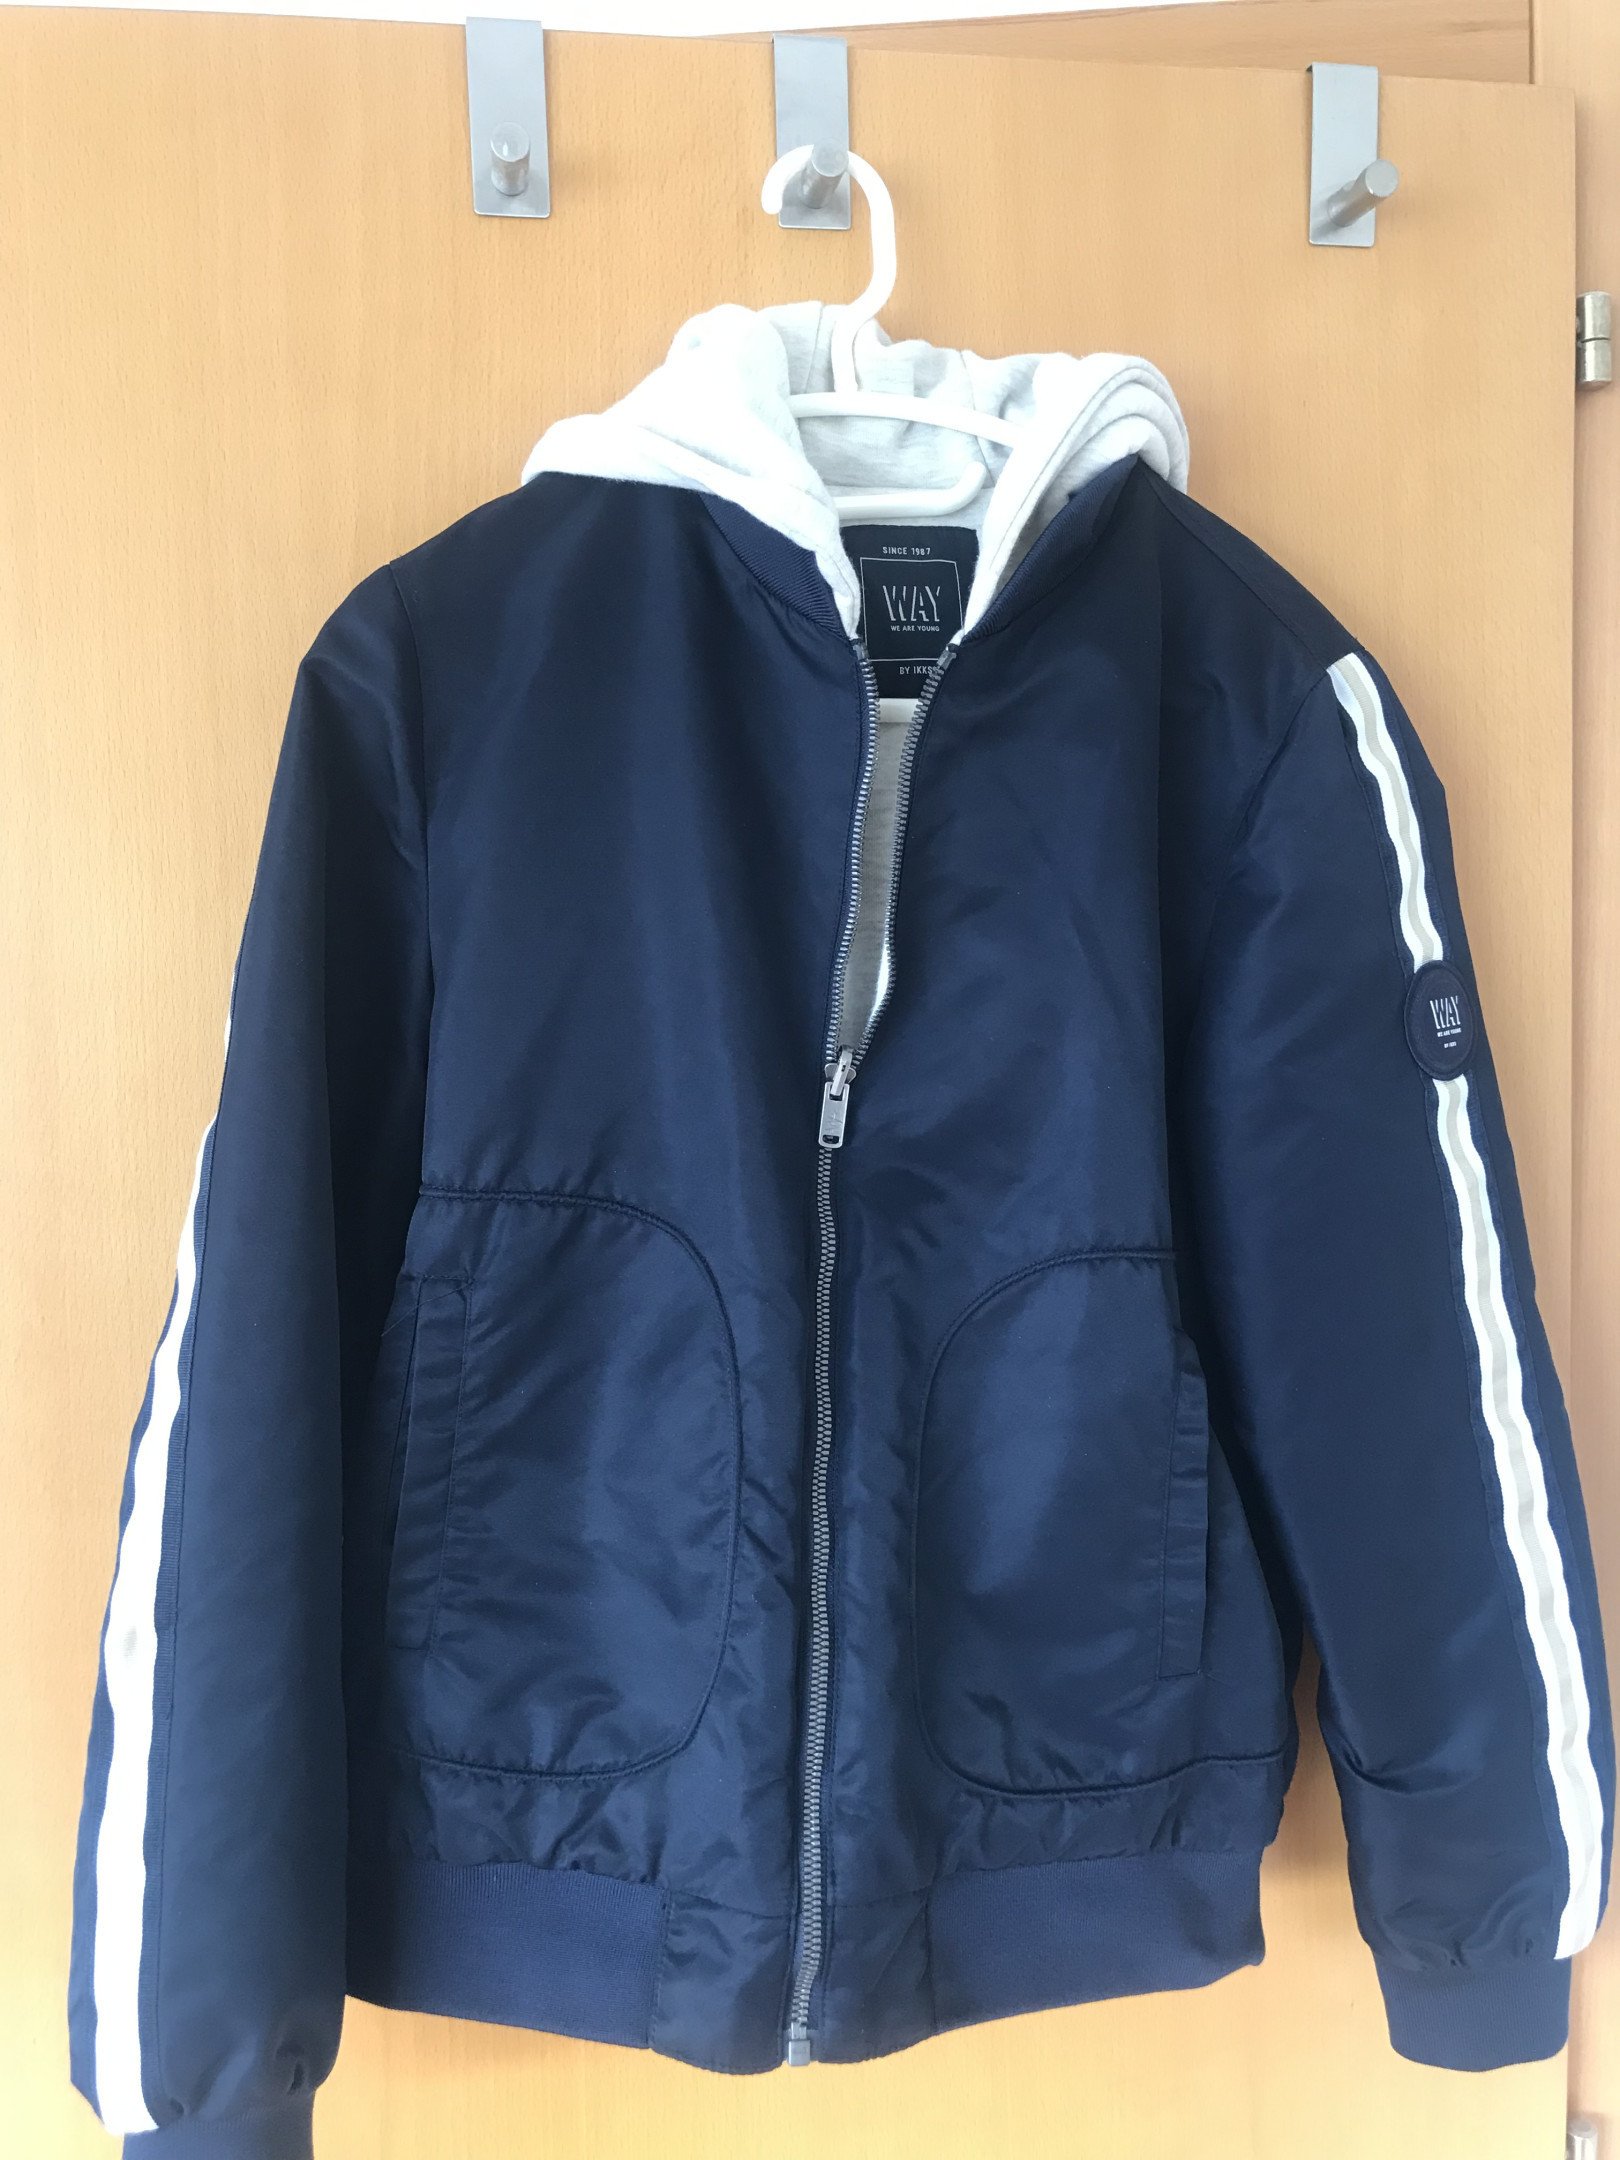 IKKS reversible jacket, navy blue and cream